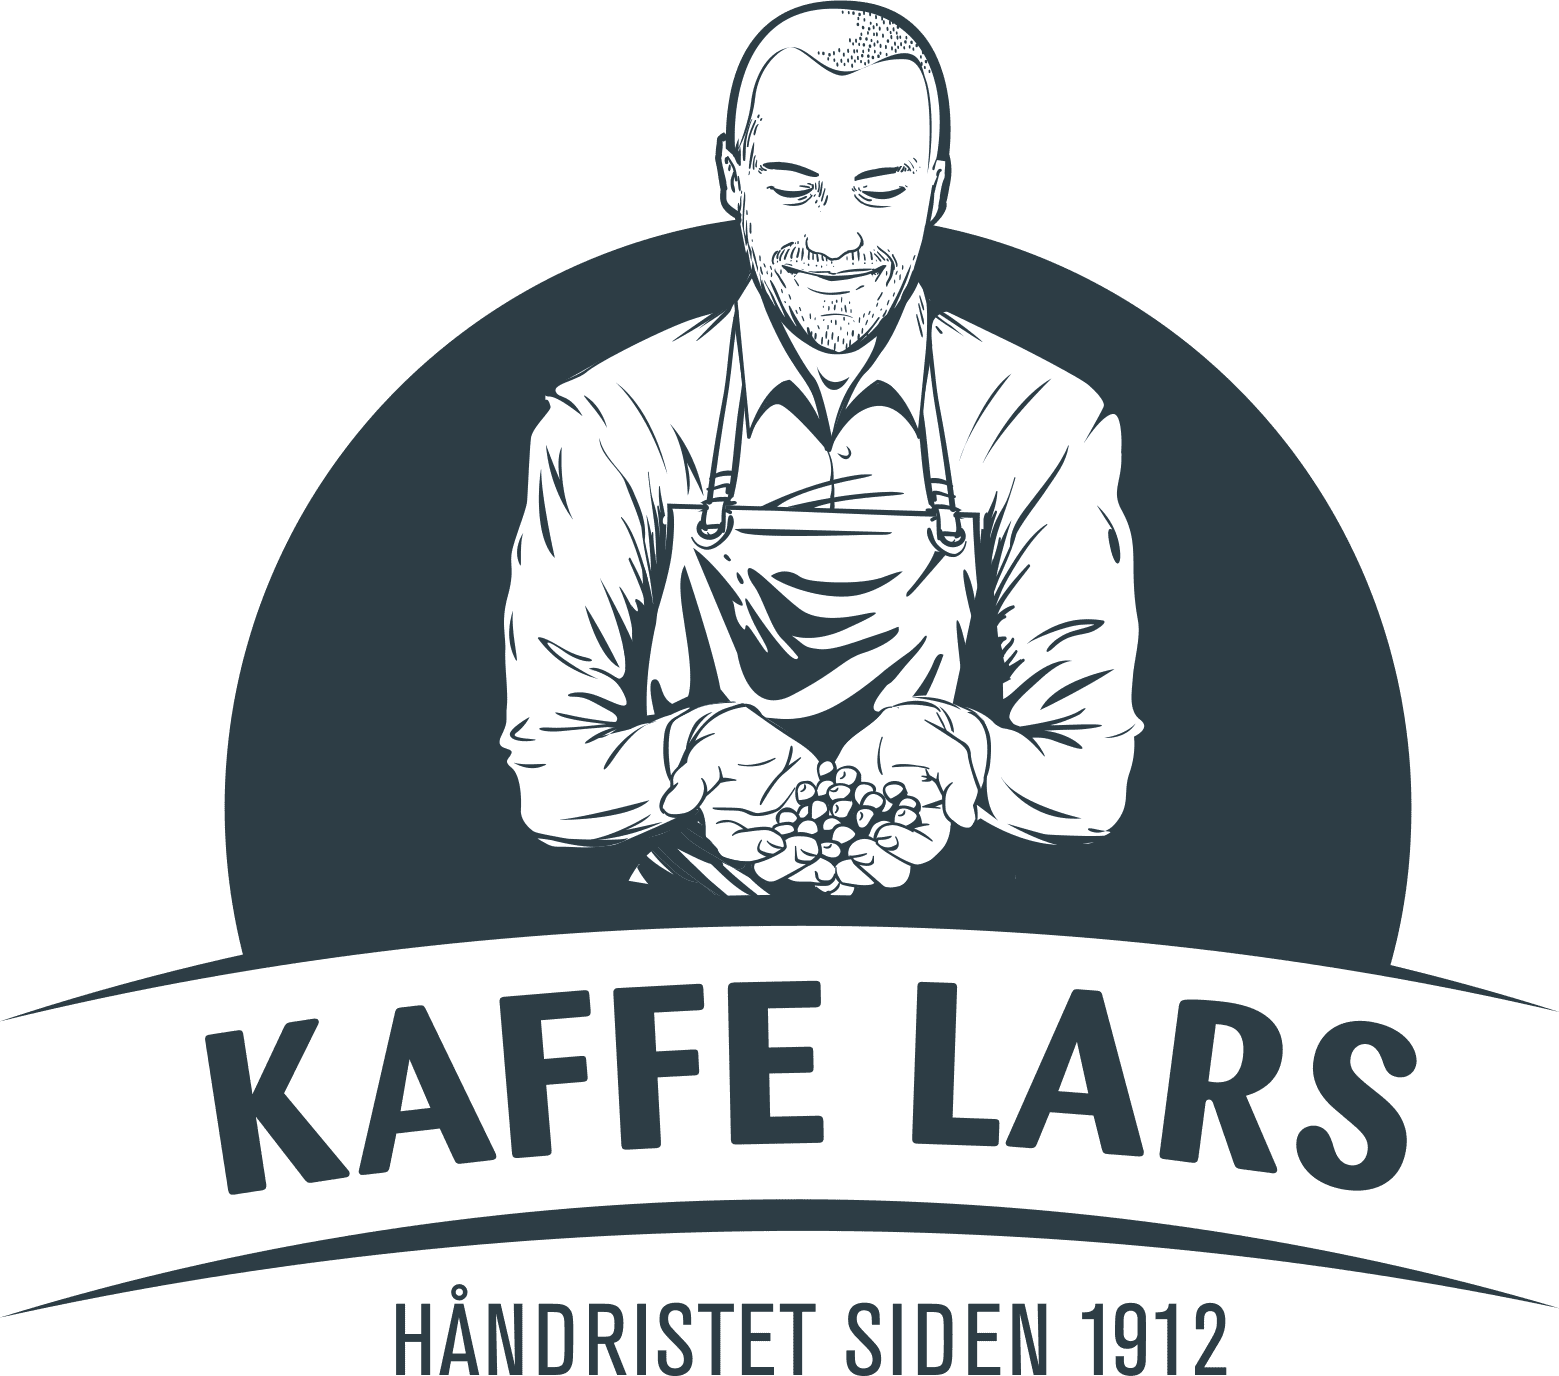 Kaffe Lars